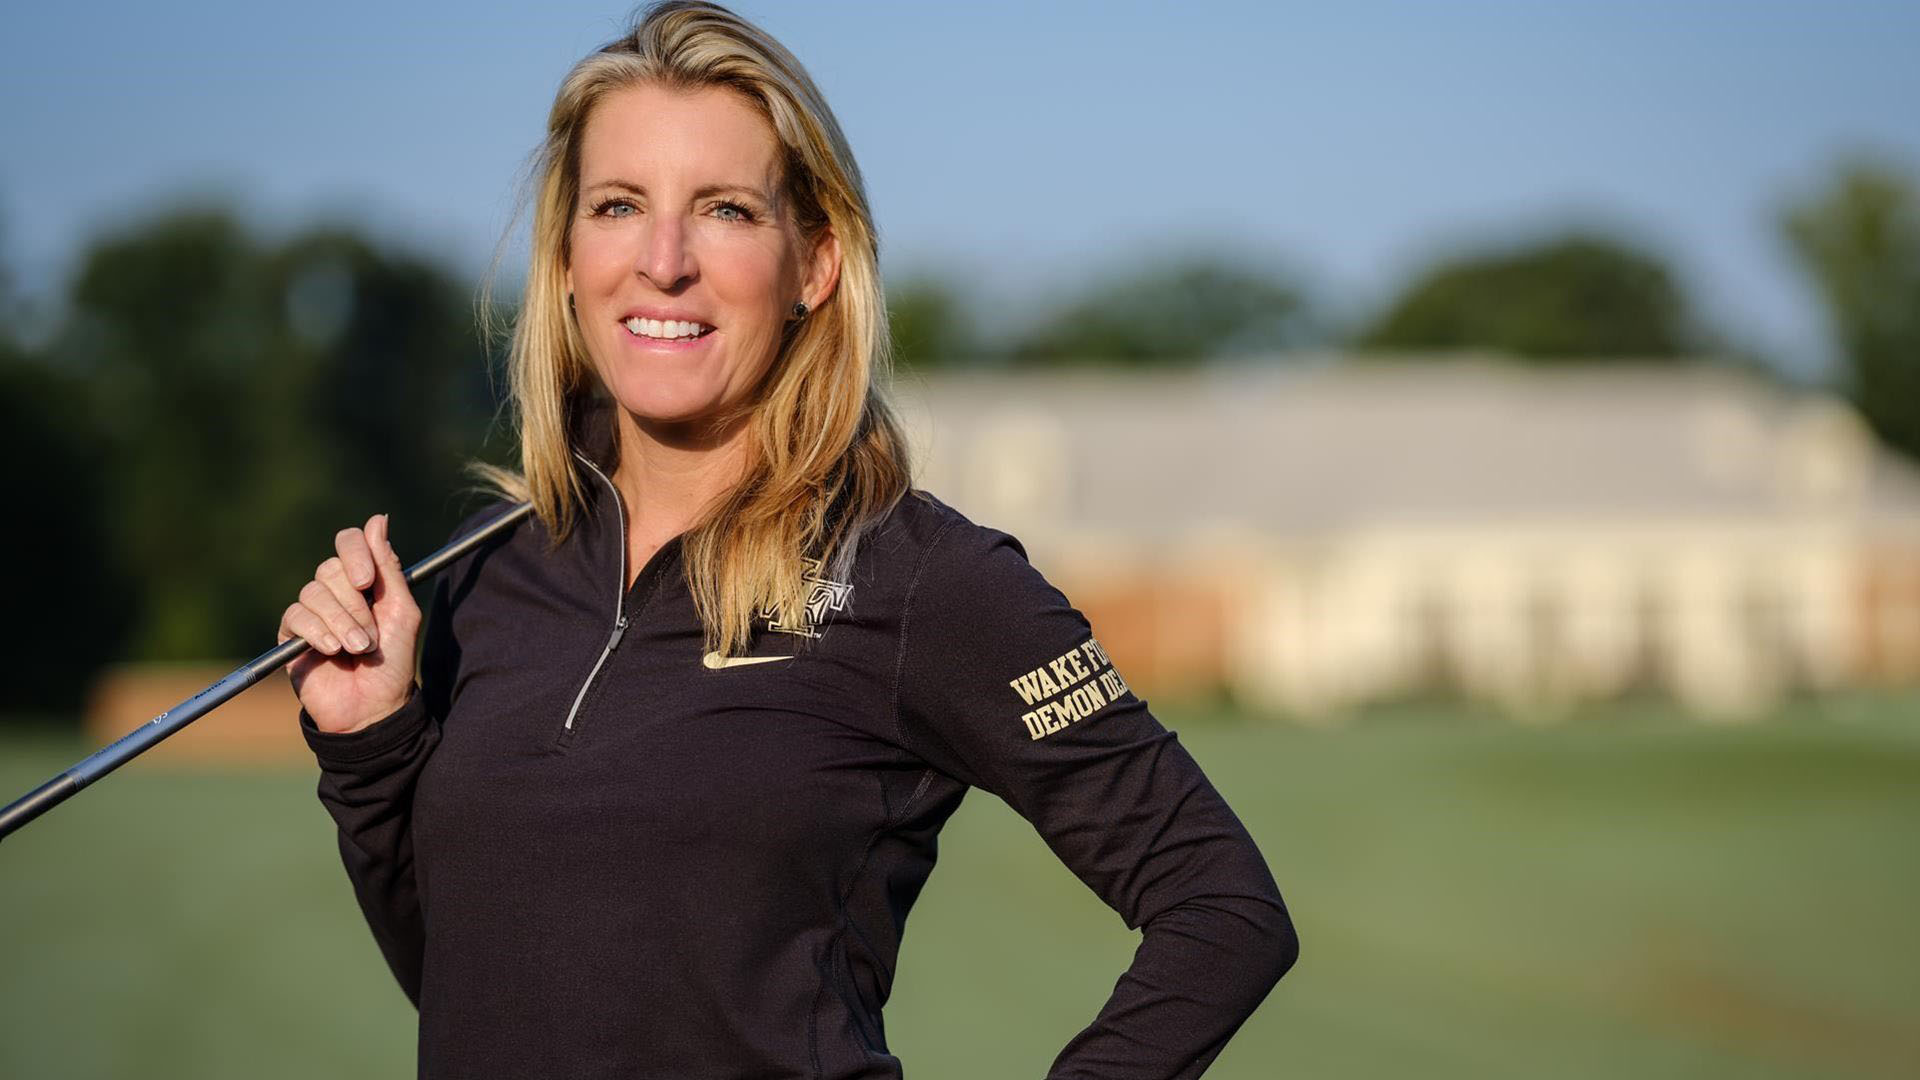 Interview with Kim Lewellen, Wake Forest Women's Golf Coach